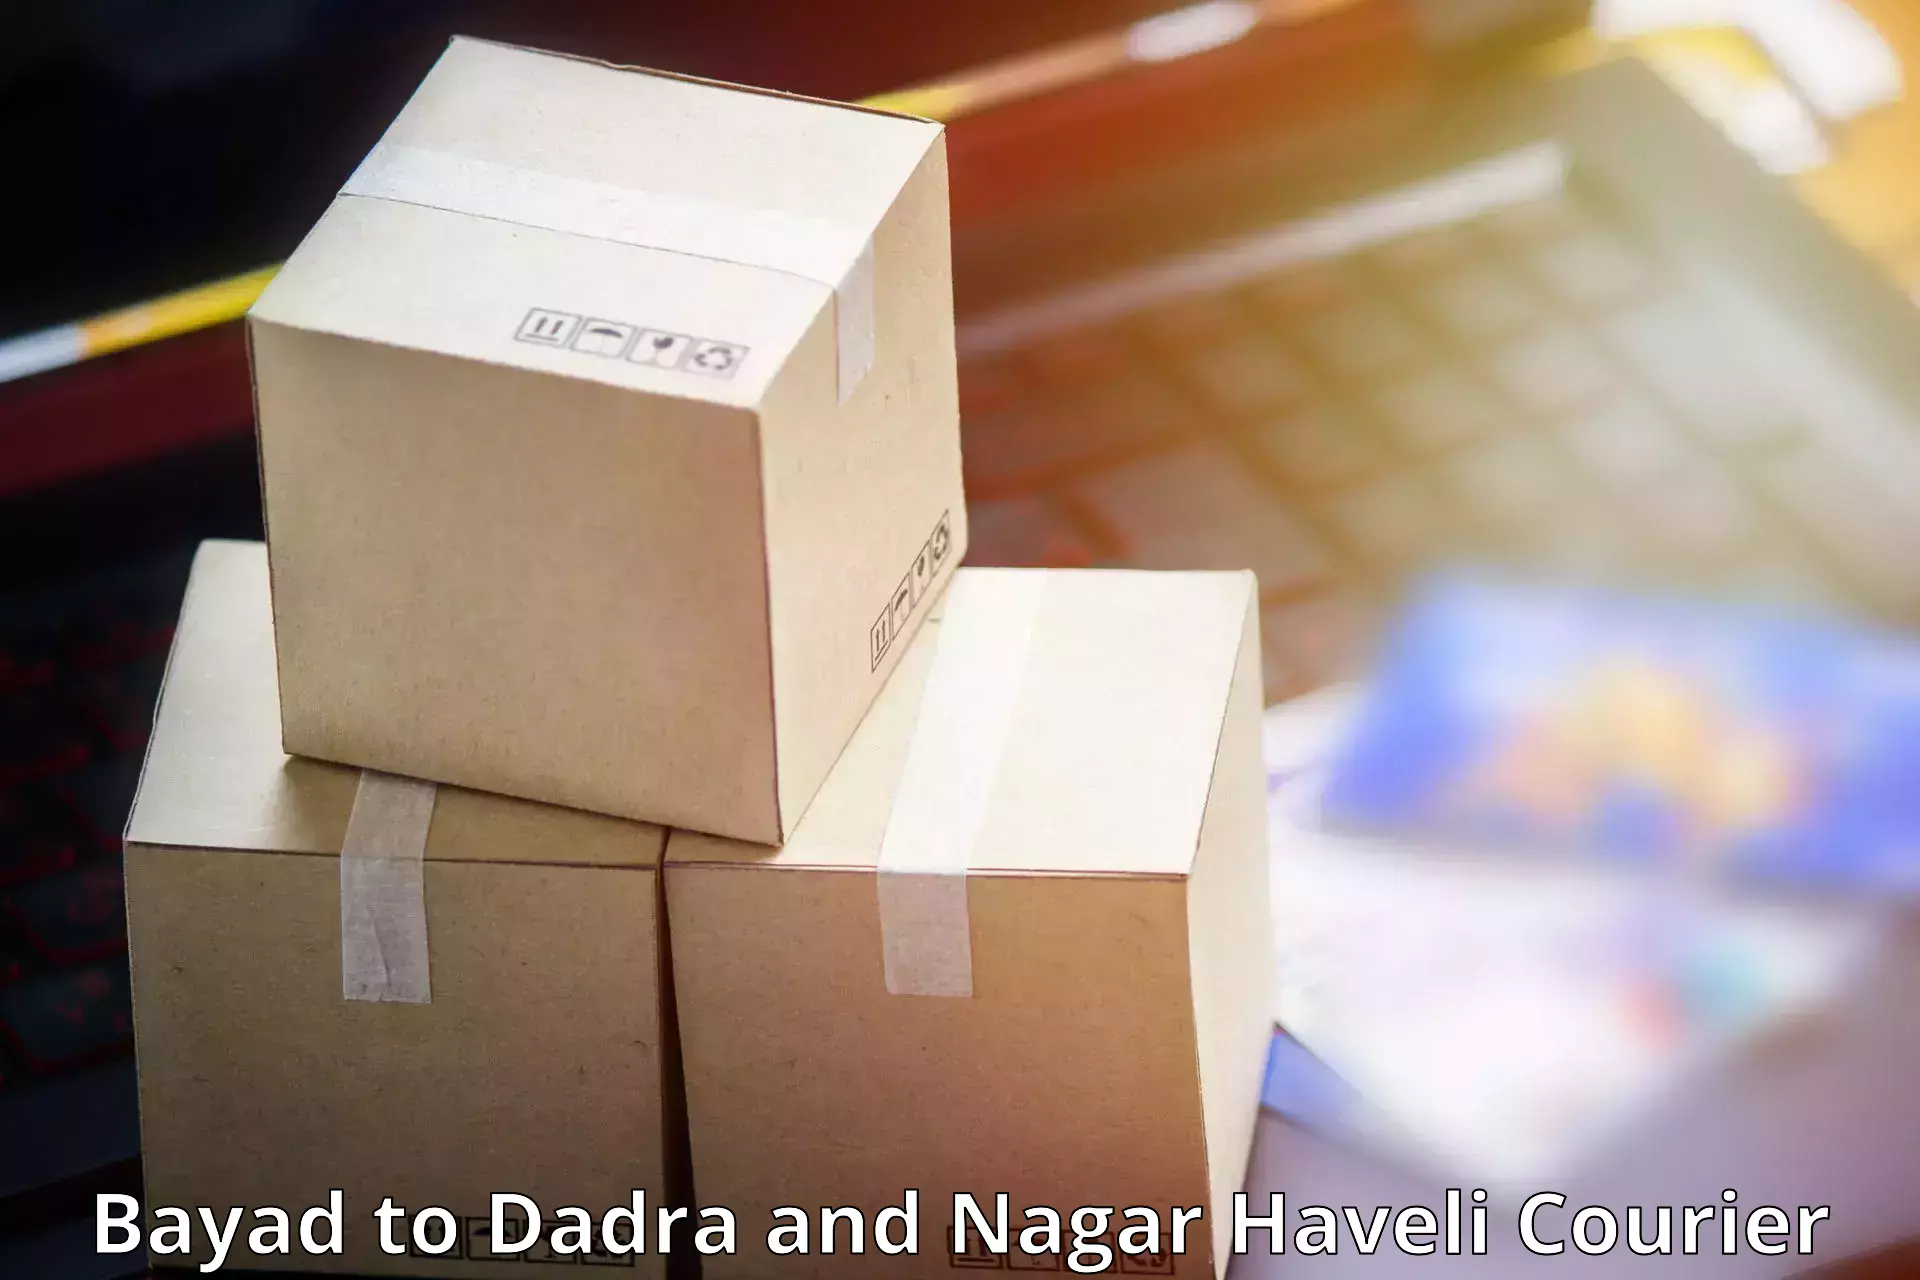 Express courier facilities Bayad to Dadra and Nagar Haveli